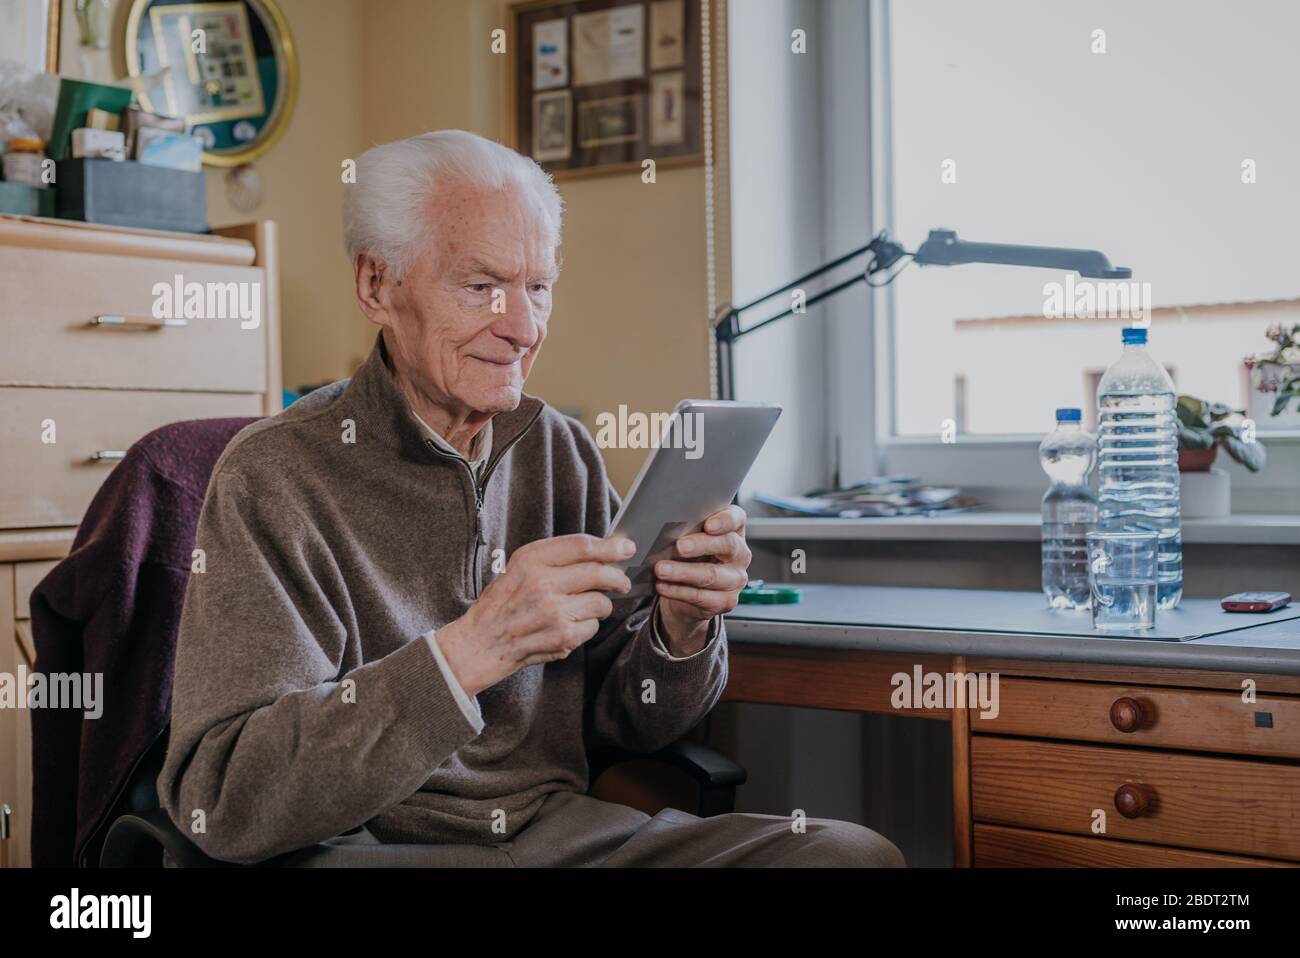 Positive Senior using Digital Tablet Stock Photo